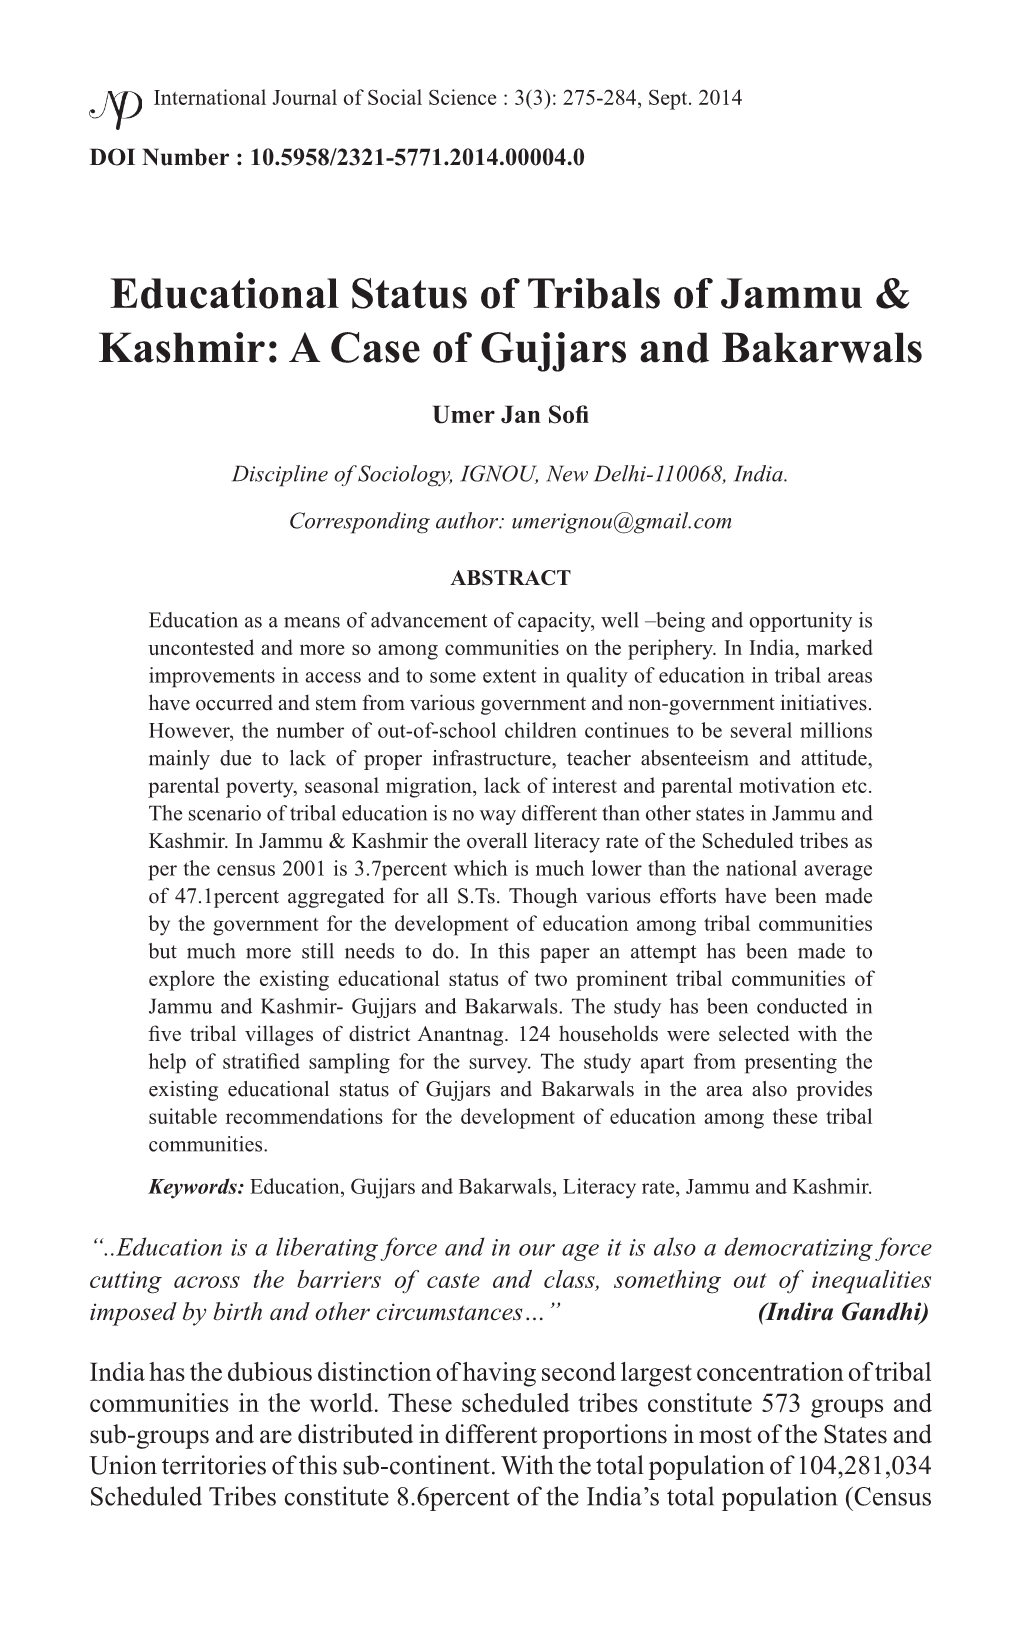 Educational Status of Tribals of Jammu & Kashmir